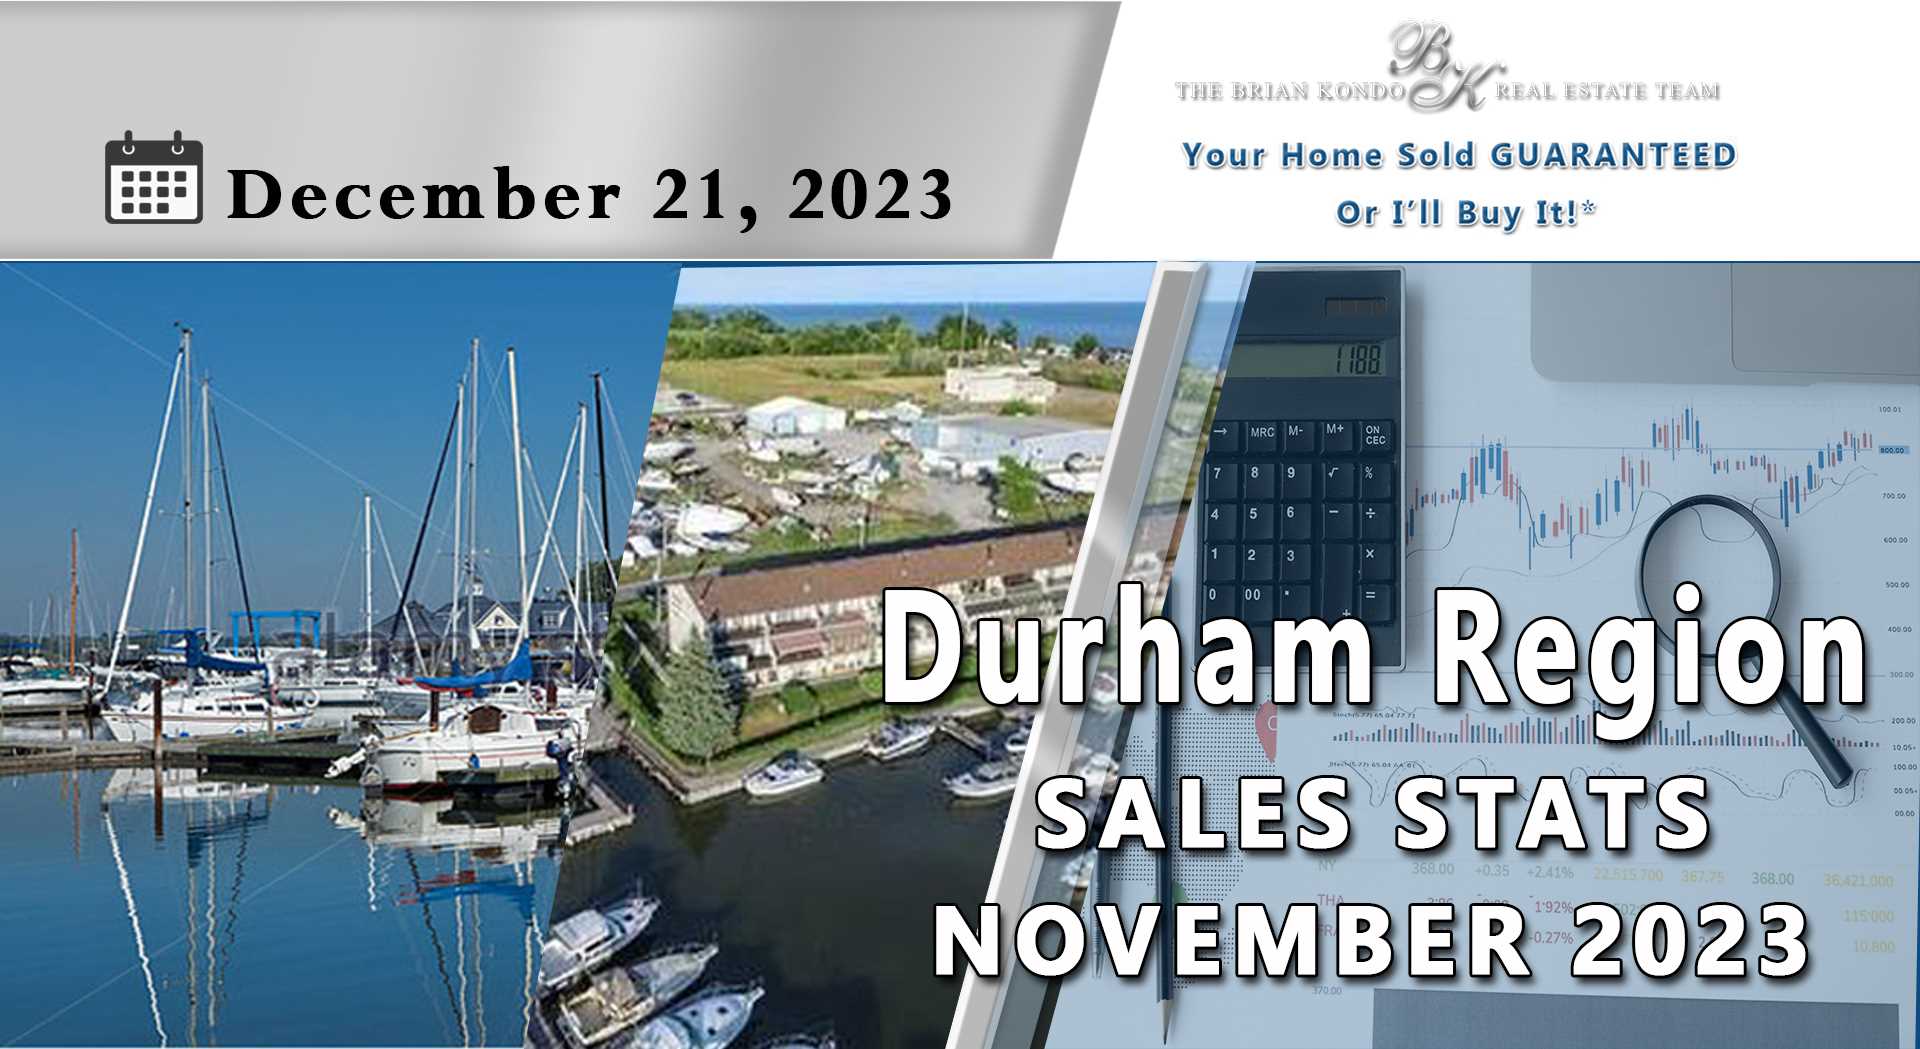 DURHAM REGION SALES STATS NOVEMBER 2023